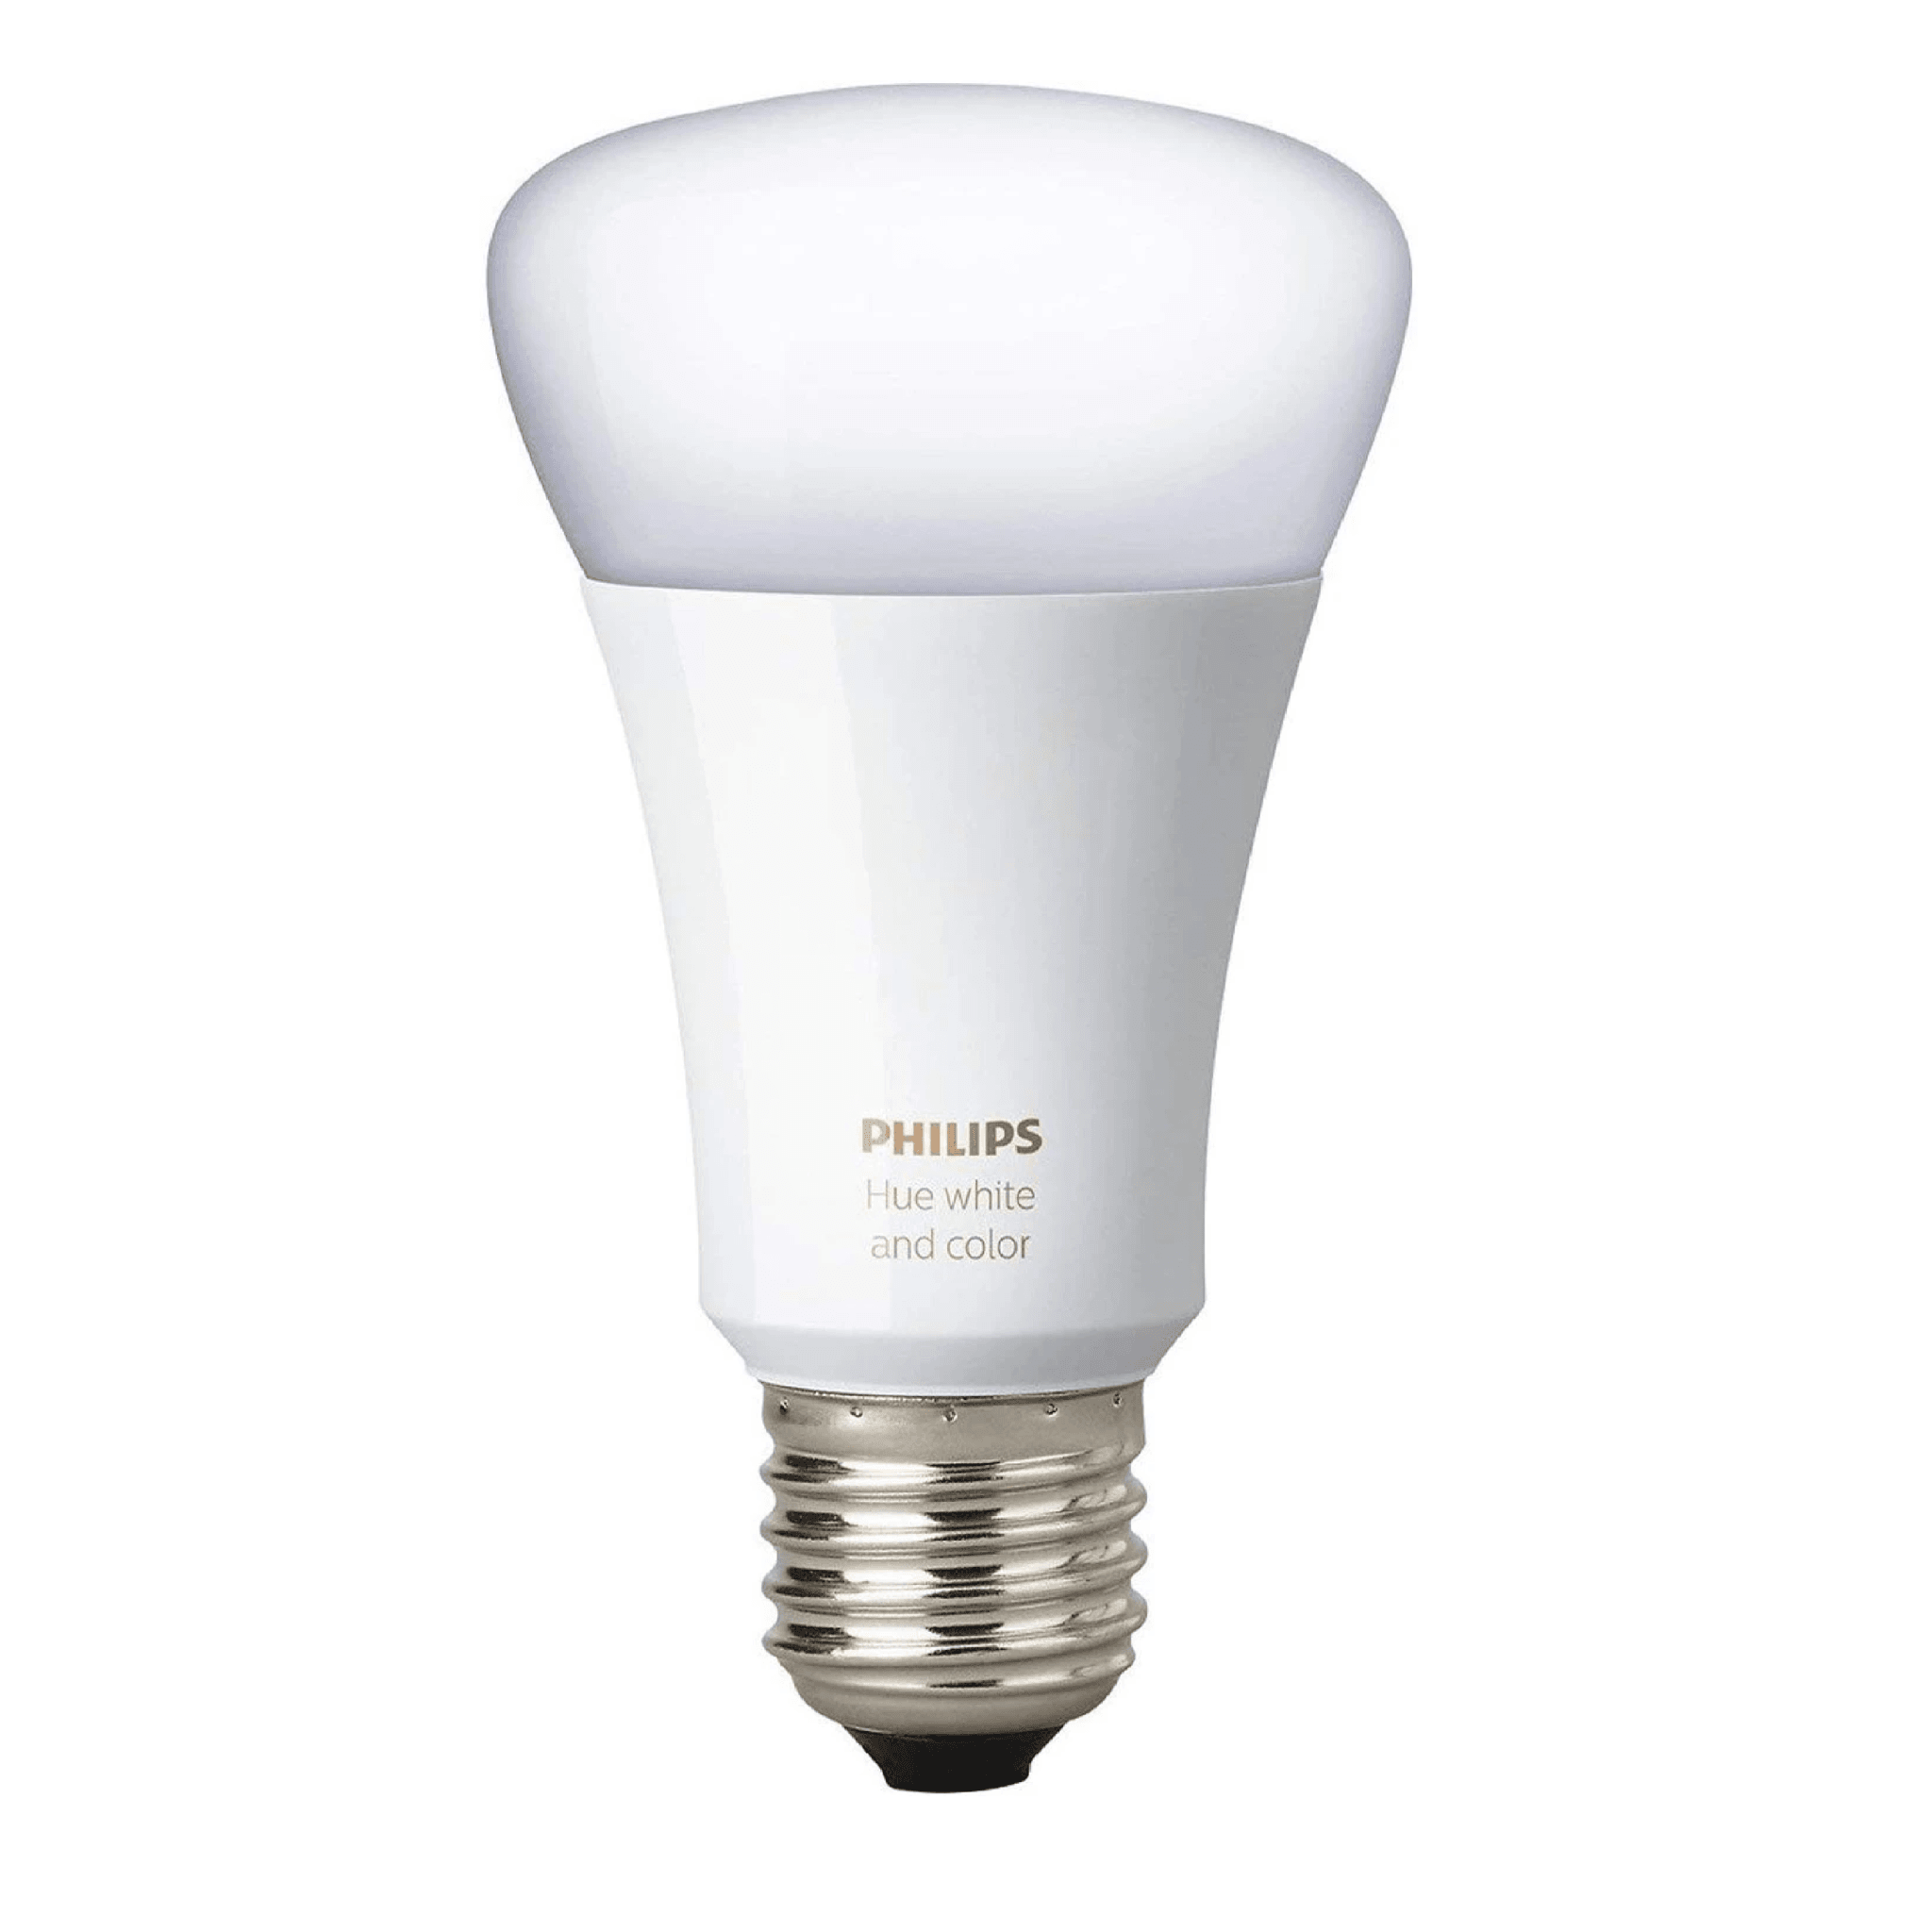 Philips HUE White Ambiance LED Smart Bulb - Store 974 | ستور ٩٧٤